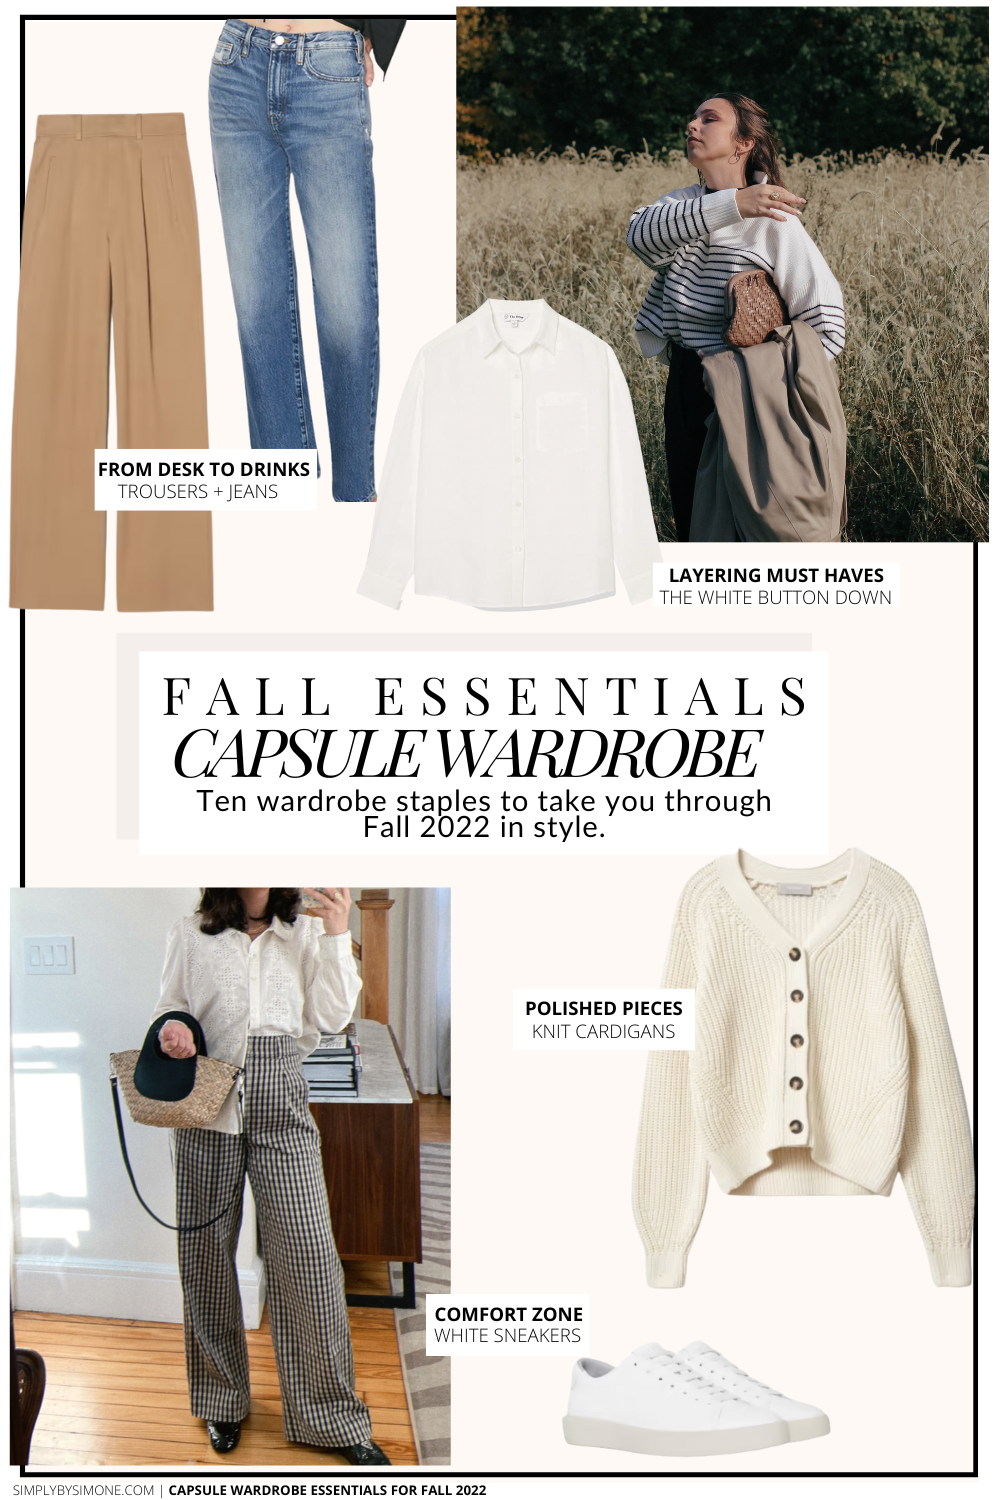 Capsule Wardrobe Essentials for Fall 2022